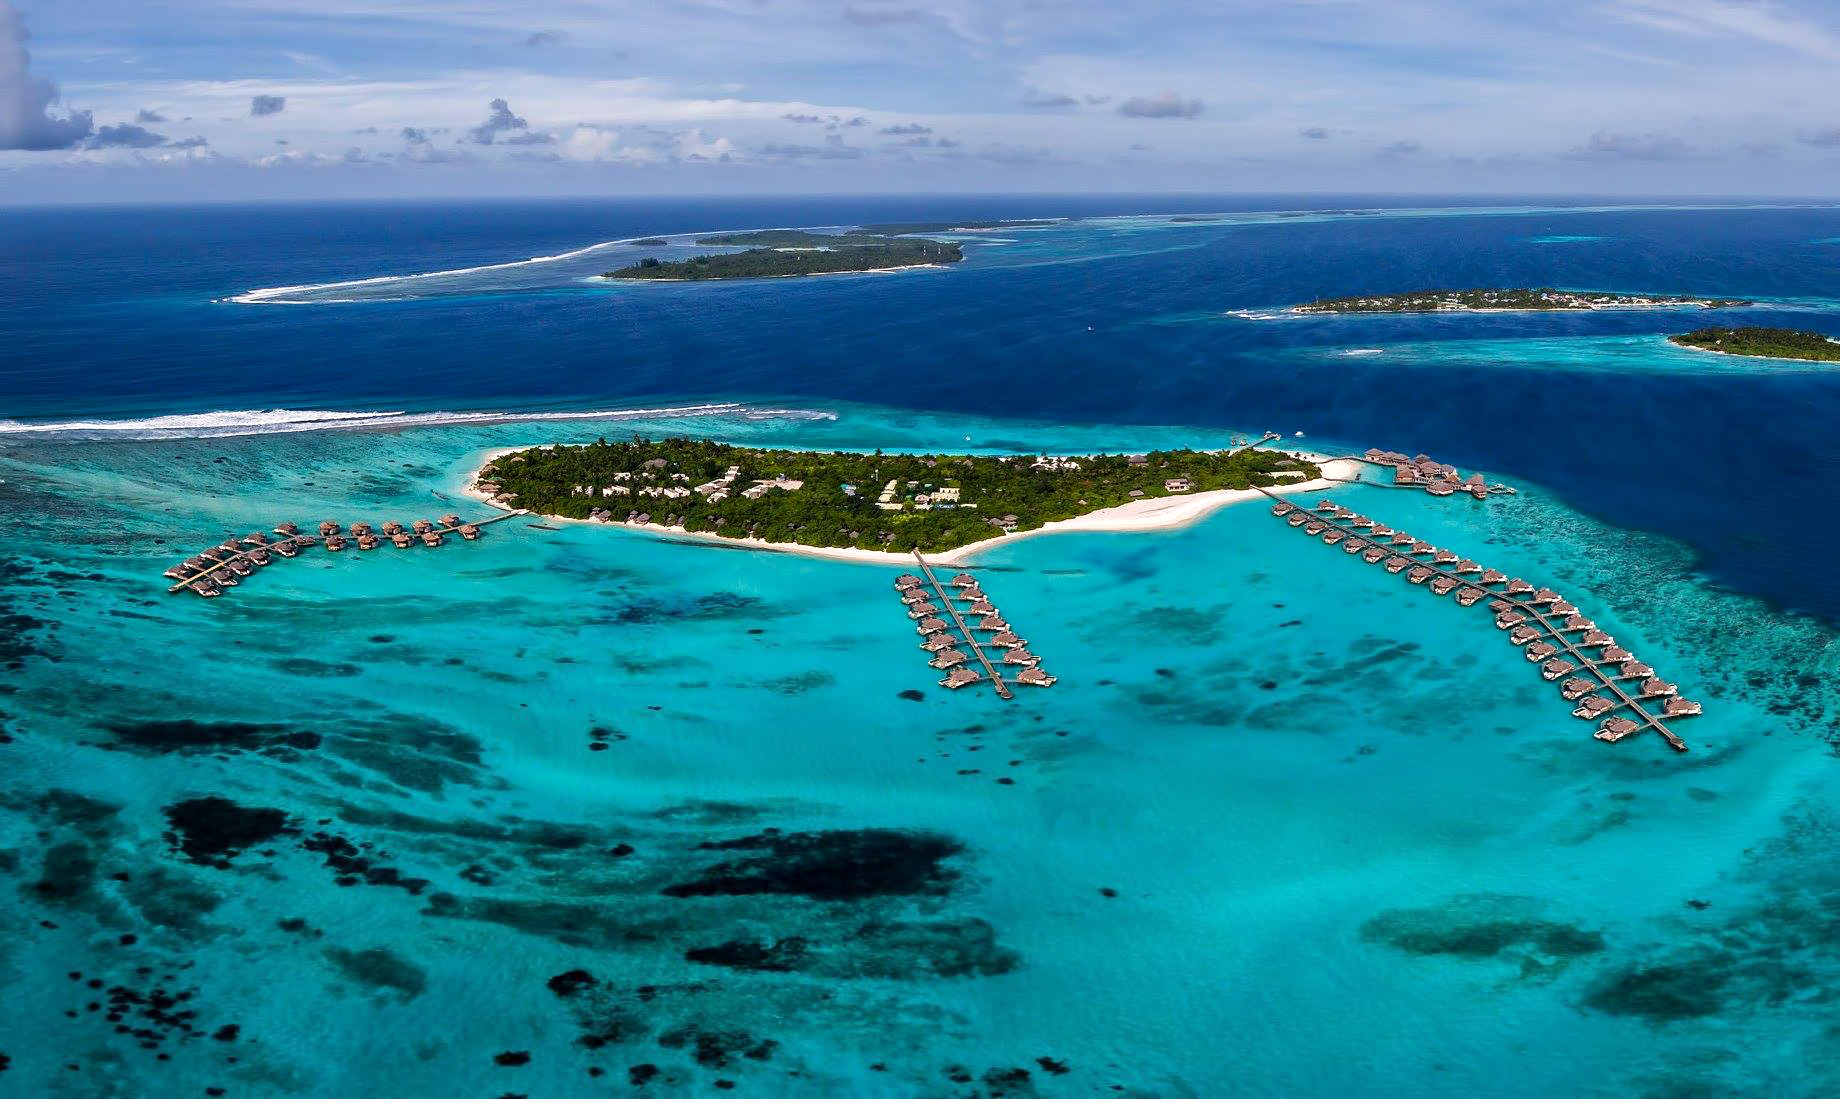 Six Senses Laamu Resort - Laamu Atoll, Maldives